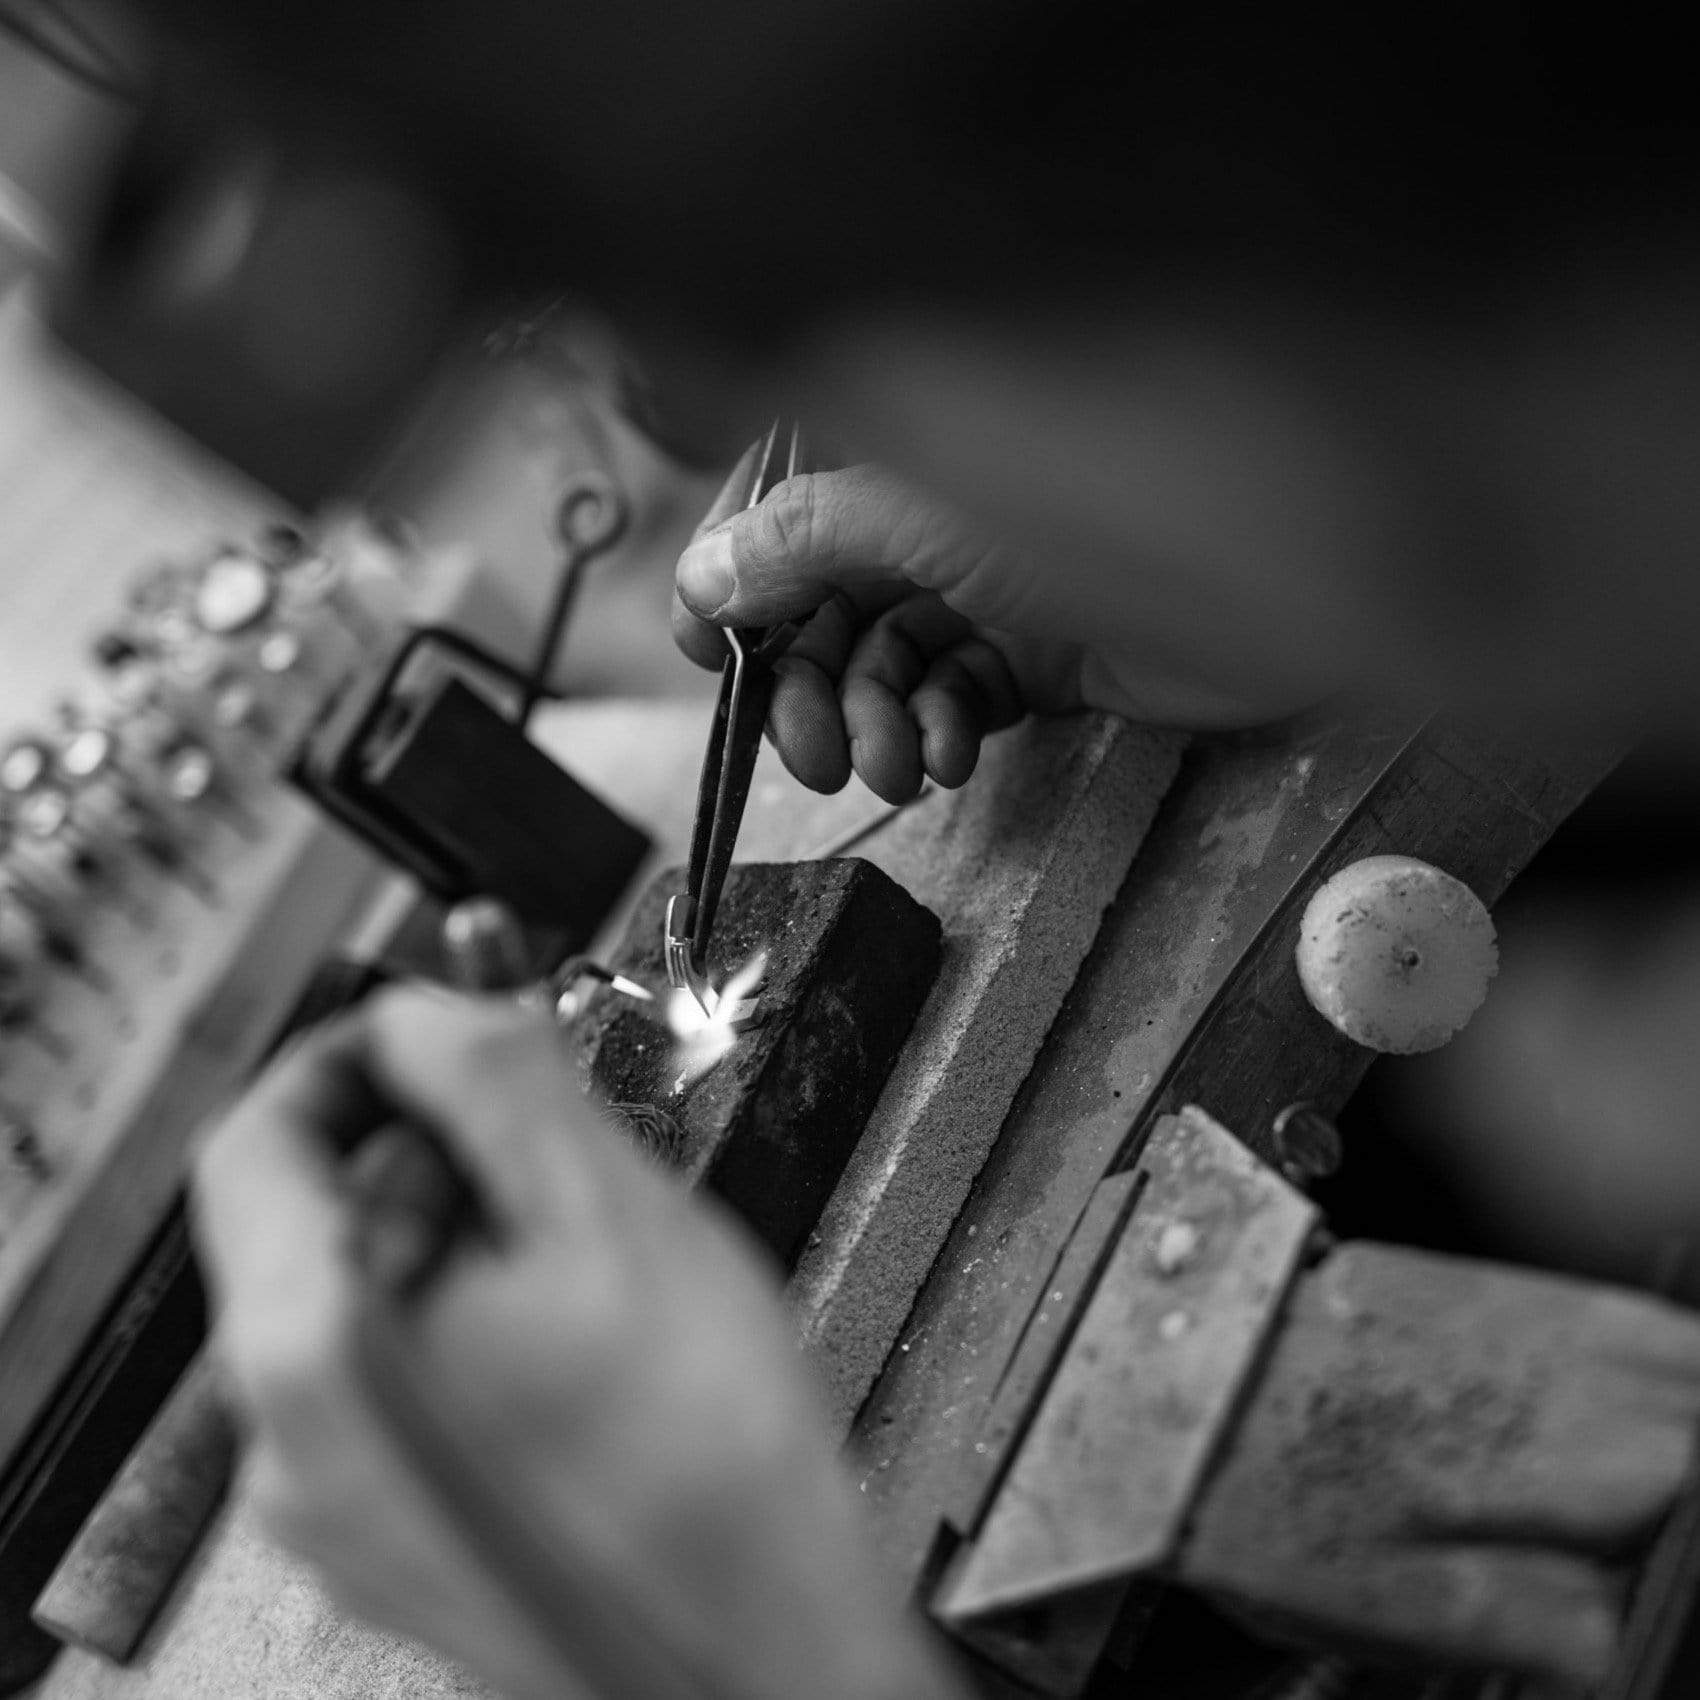 Cufflinks is being crafted by Norwegian goldsmiths